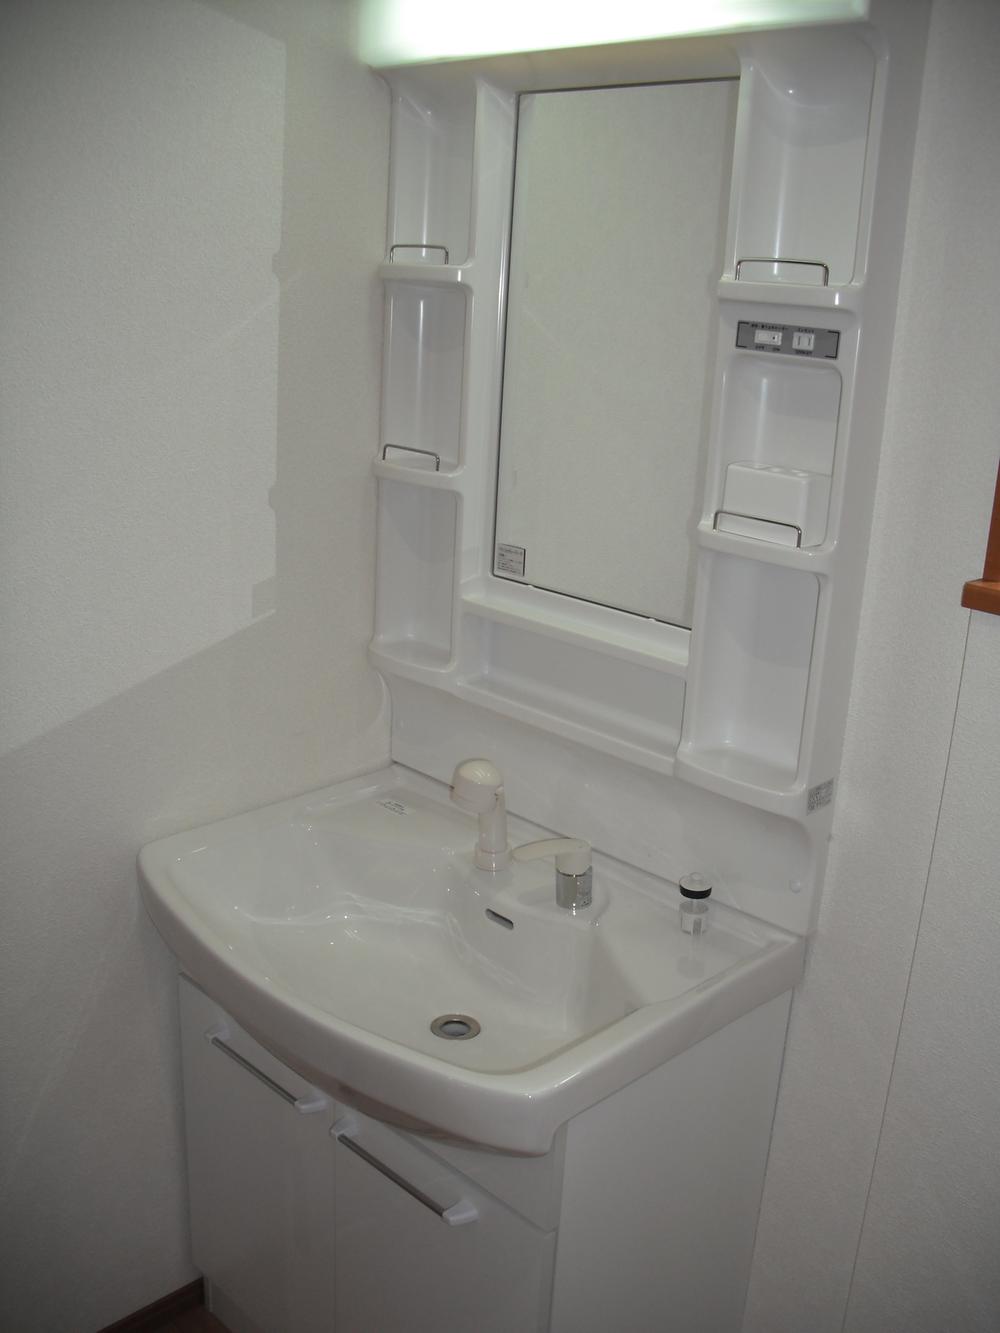 Wash basin, toilet. Newly built single-family Kakogawa Onoechoyota